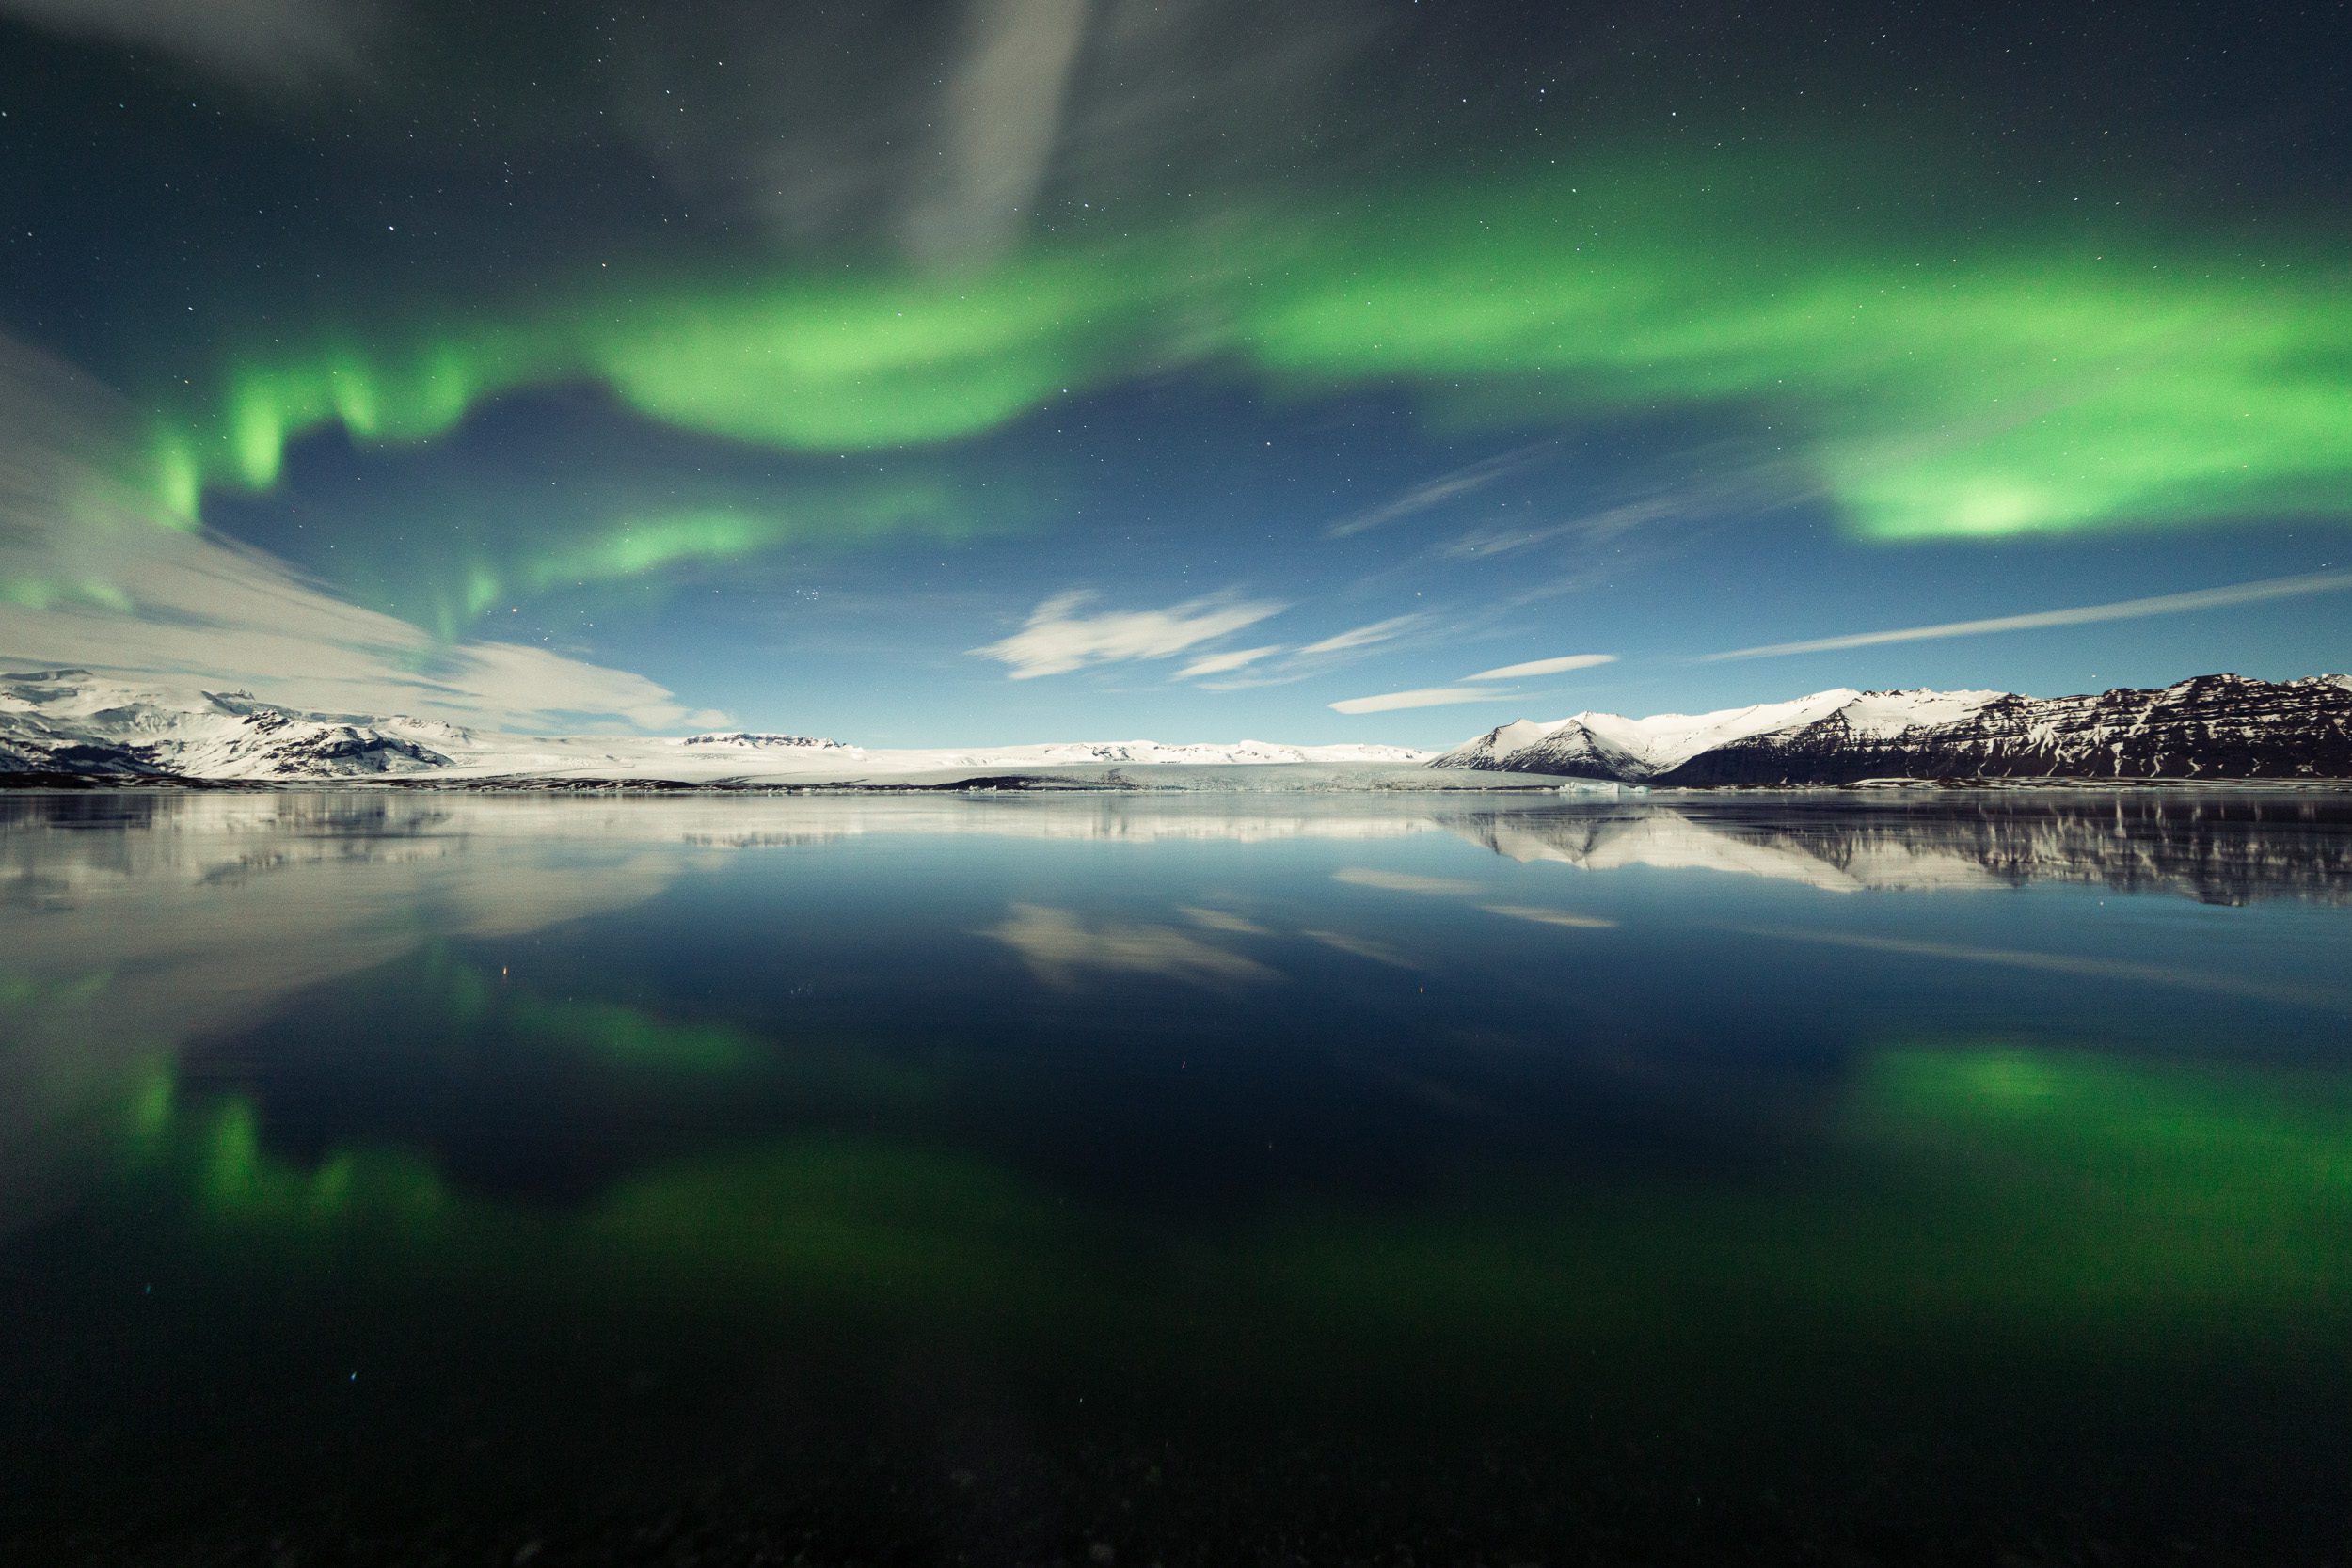 The aurora borealis above an empty ice lagoon